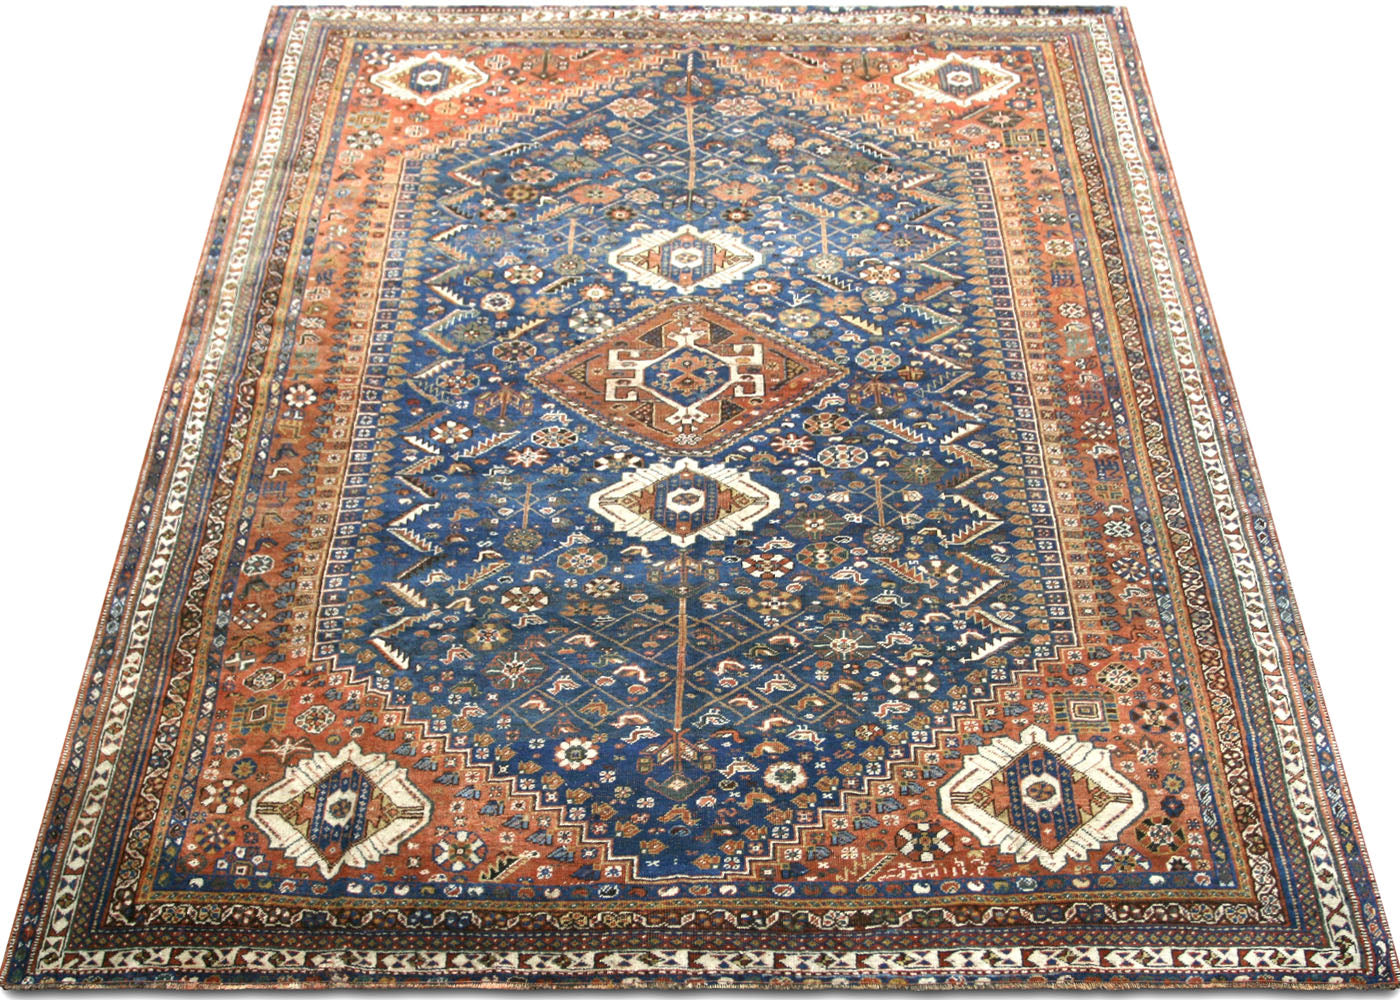 Antique Persian Shiraz Rug - 6'11" x 9'8"